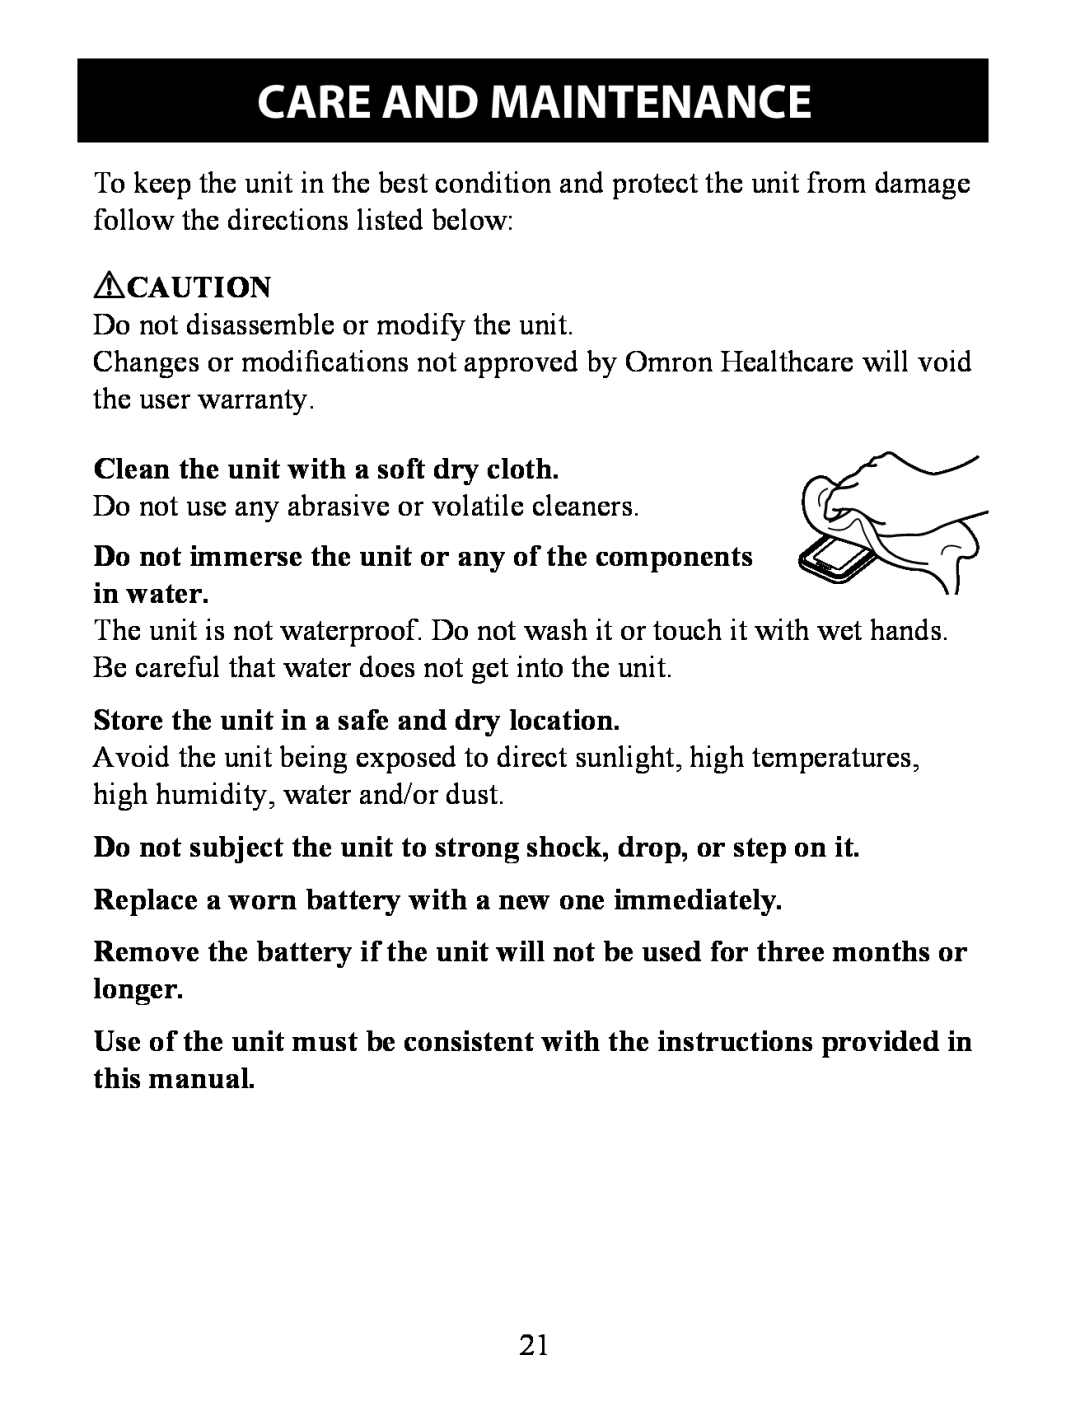 Omron HJ-324U instruction manual Care And Maintenance, Care and Maintenance, Clean the unit with a soft dry cloth 